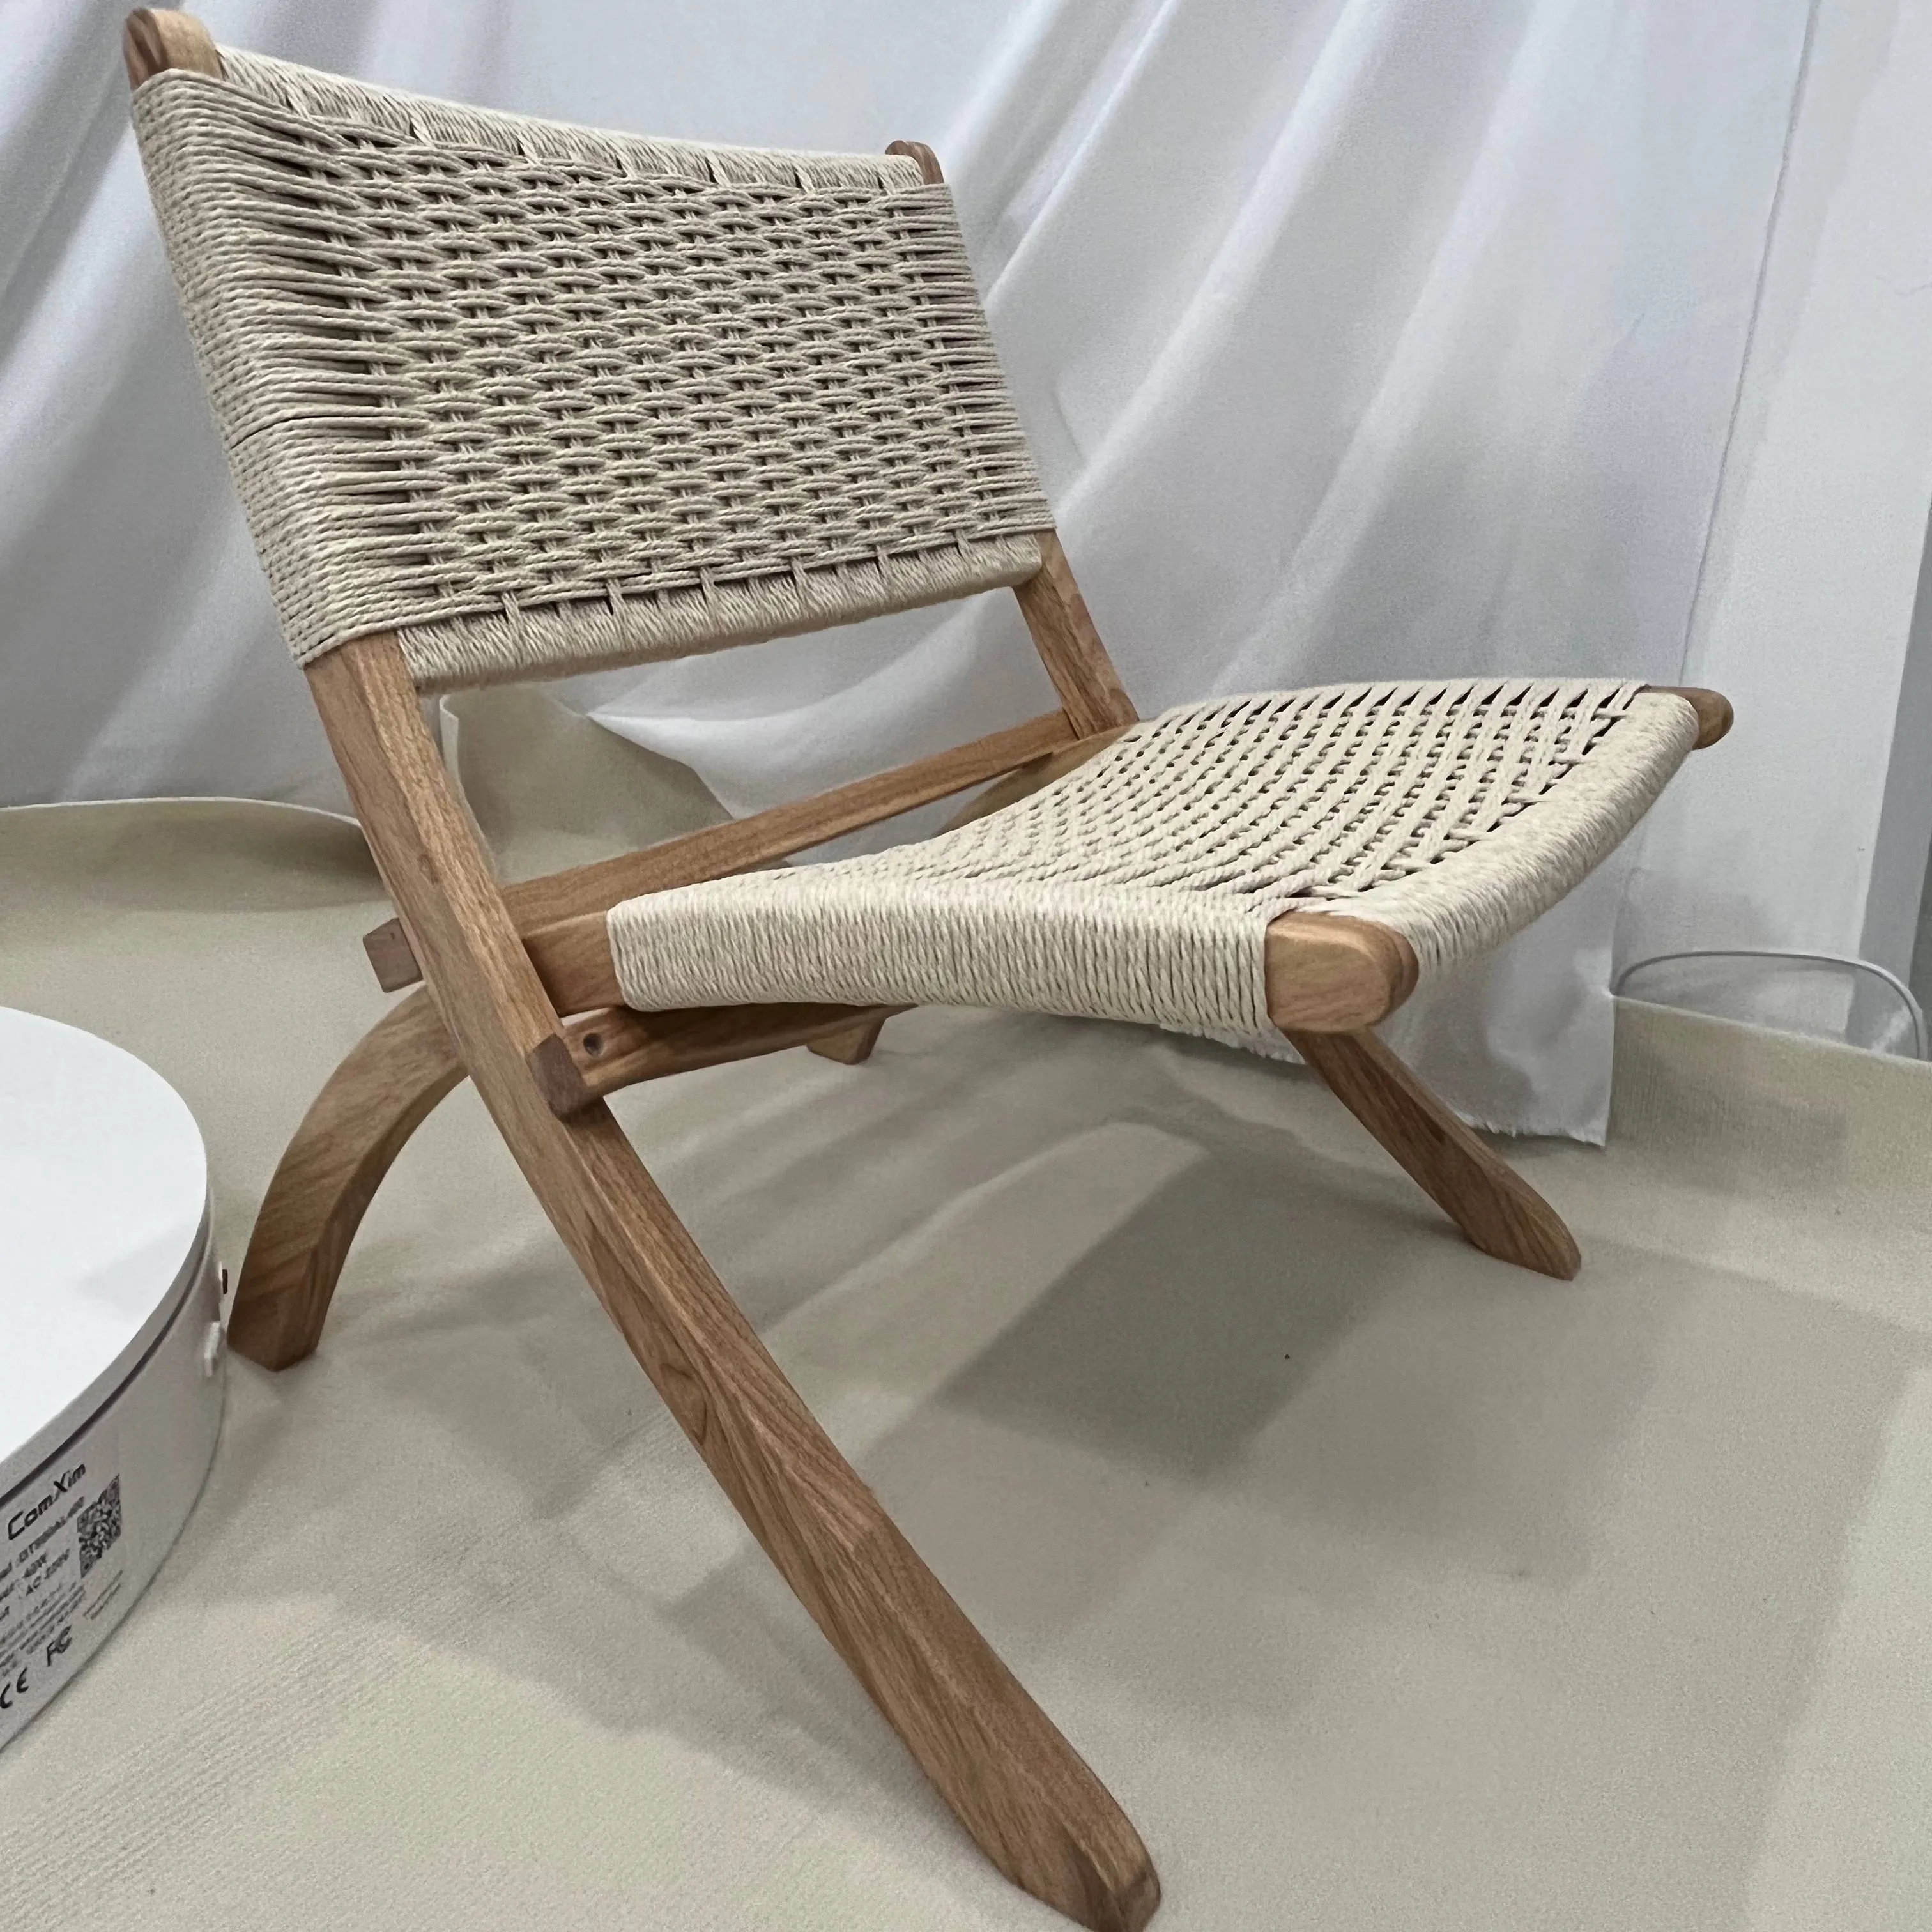 XY Best Massivholz Rattan Veranda Schuh hocker-Wohnzimmer Stuhl Strap Weaving Outdoor Stuhl